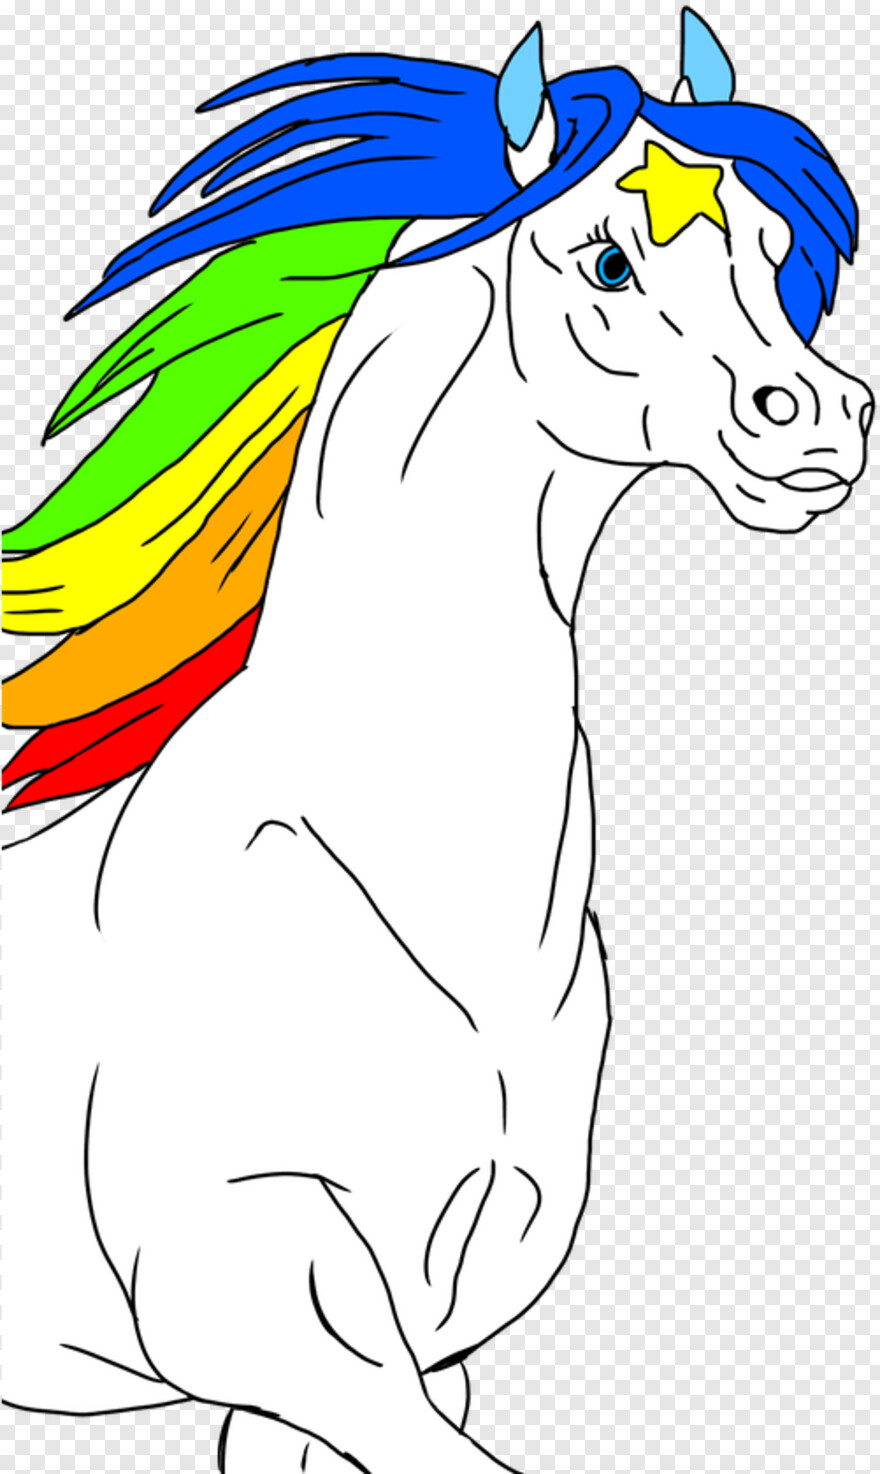 rainbow-unicorn # 893116